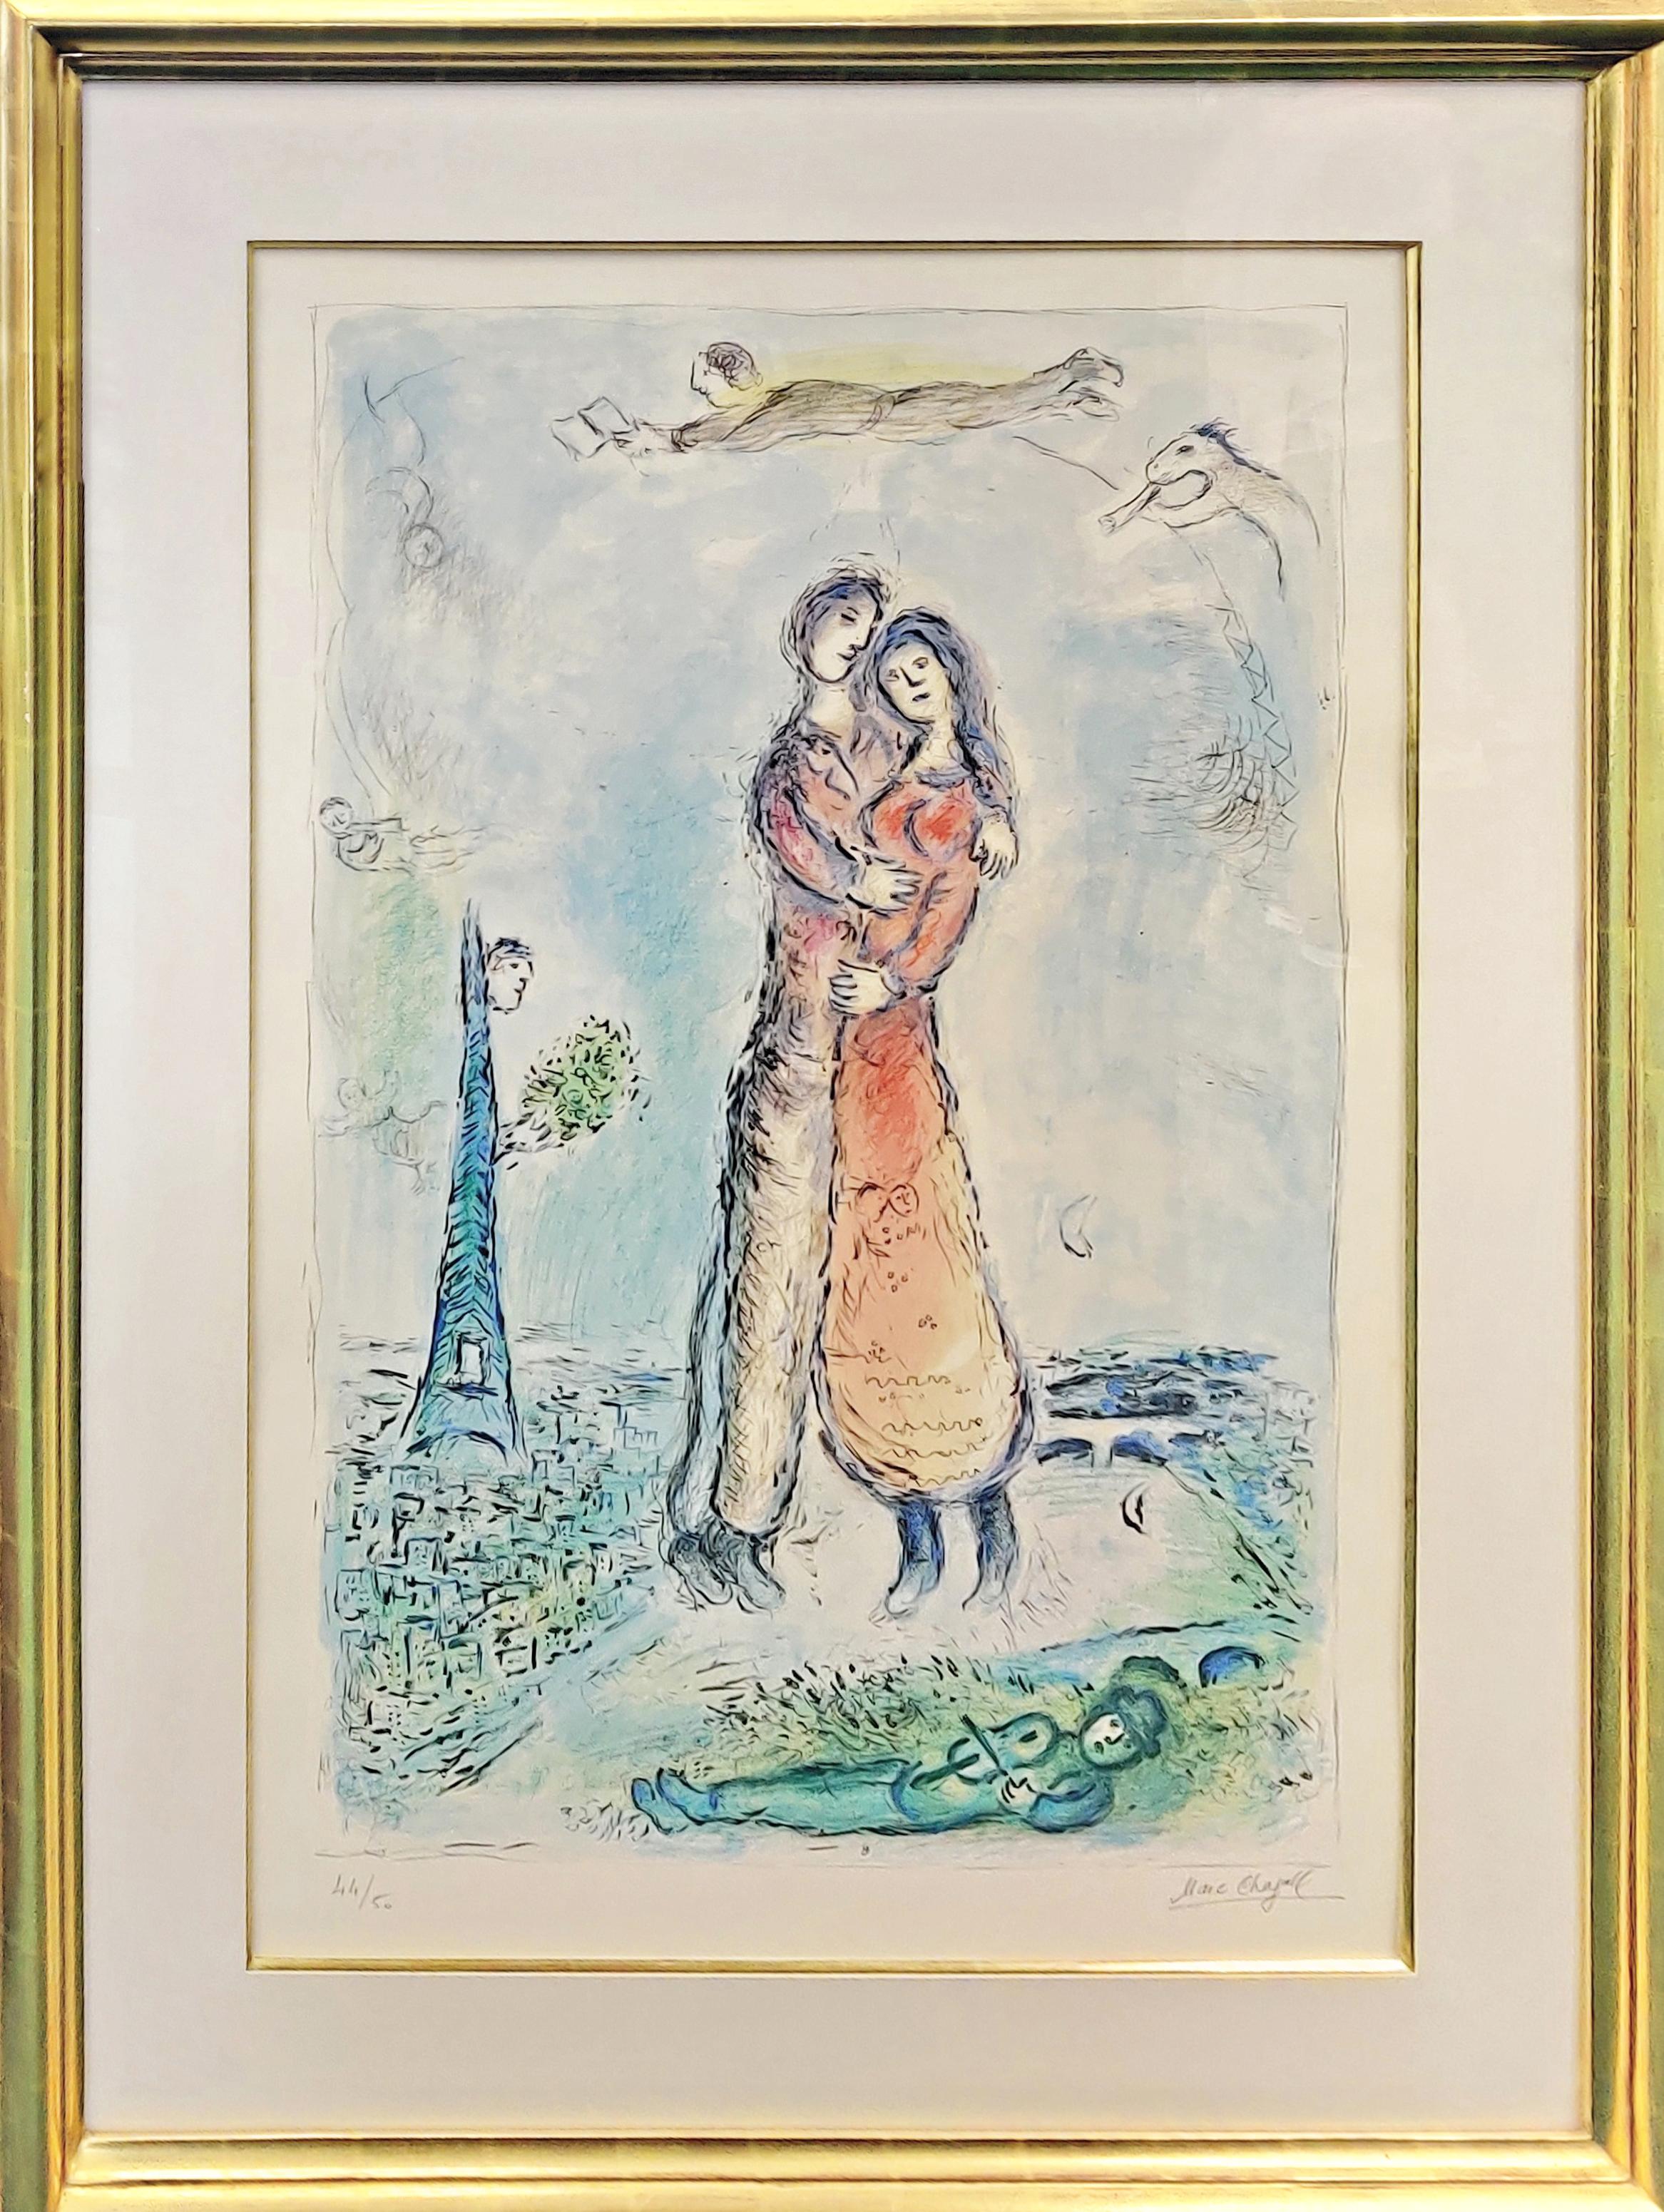 LA JOI - Print by Marc Chagall